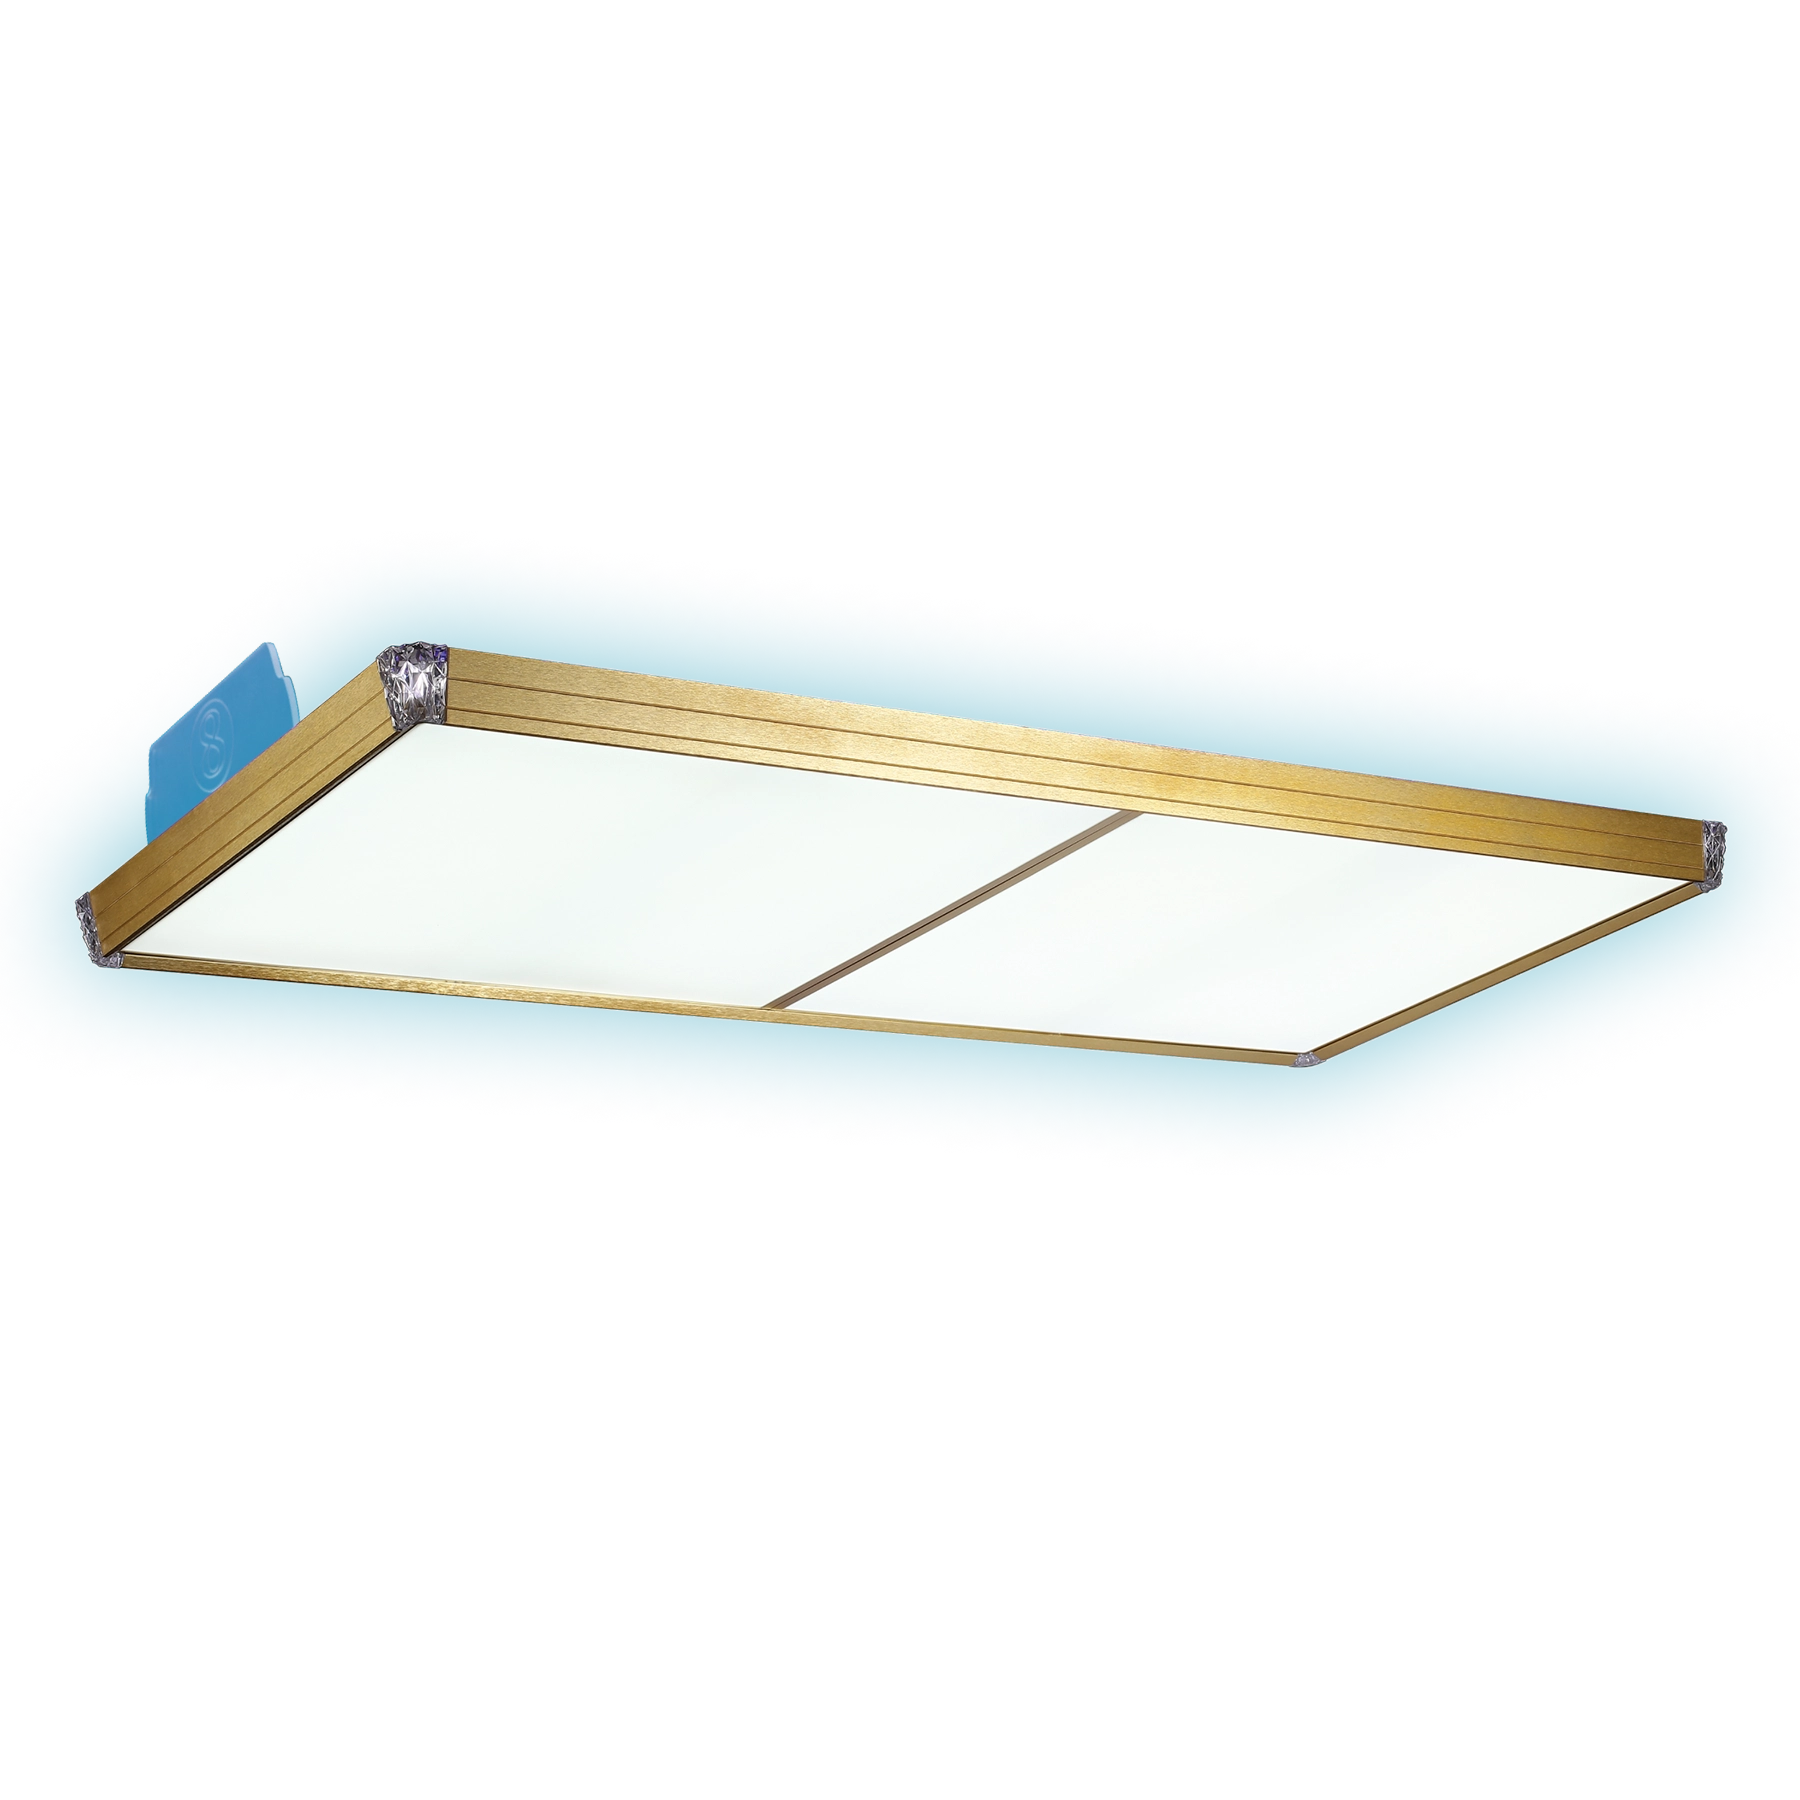 LED BILLIARD LIGHT - H Series H2 - For 9 FT Pool Table